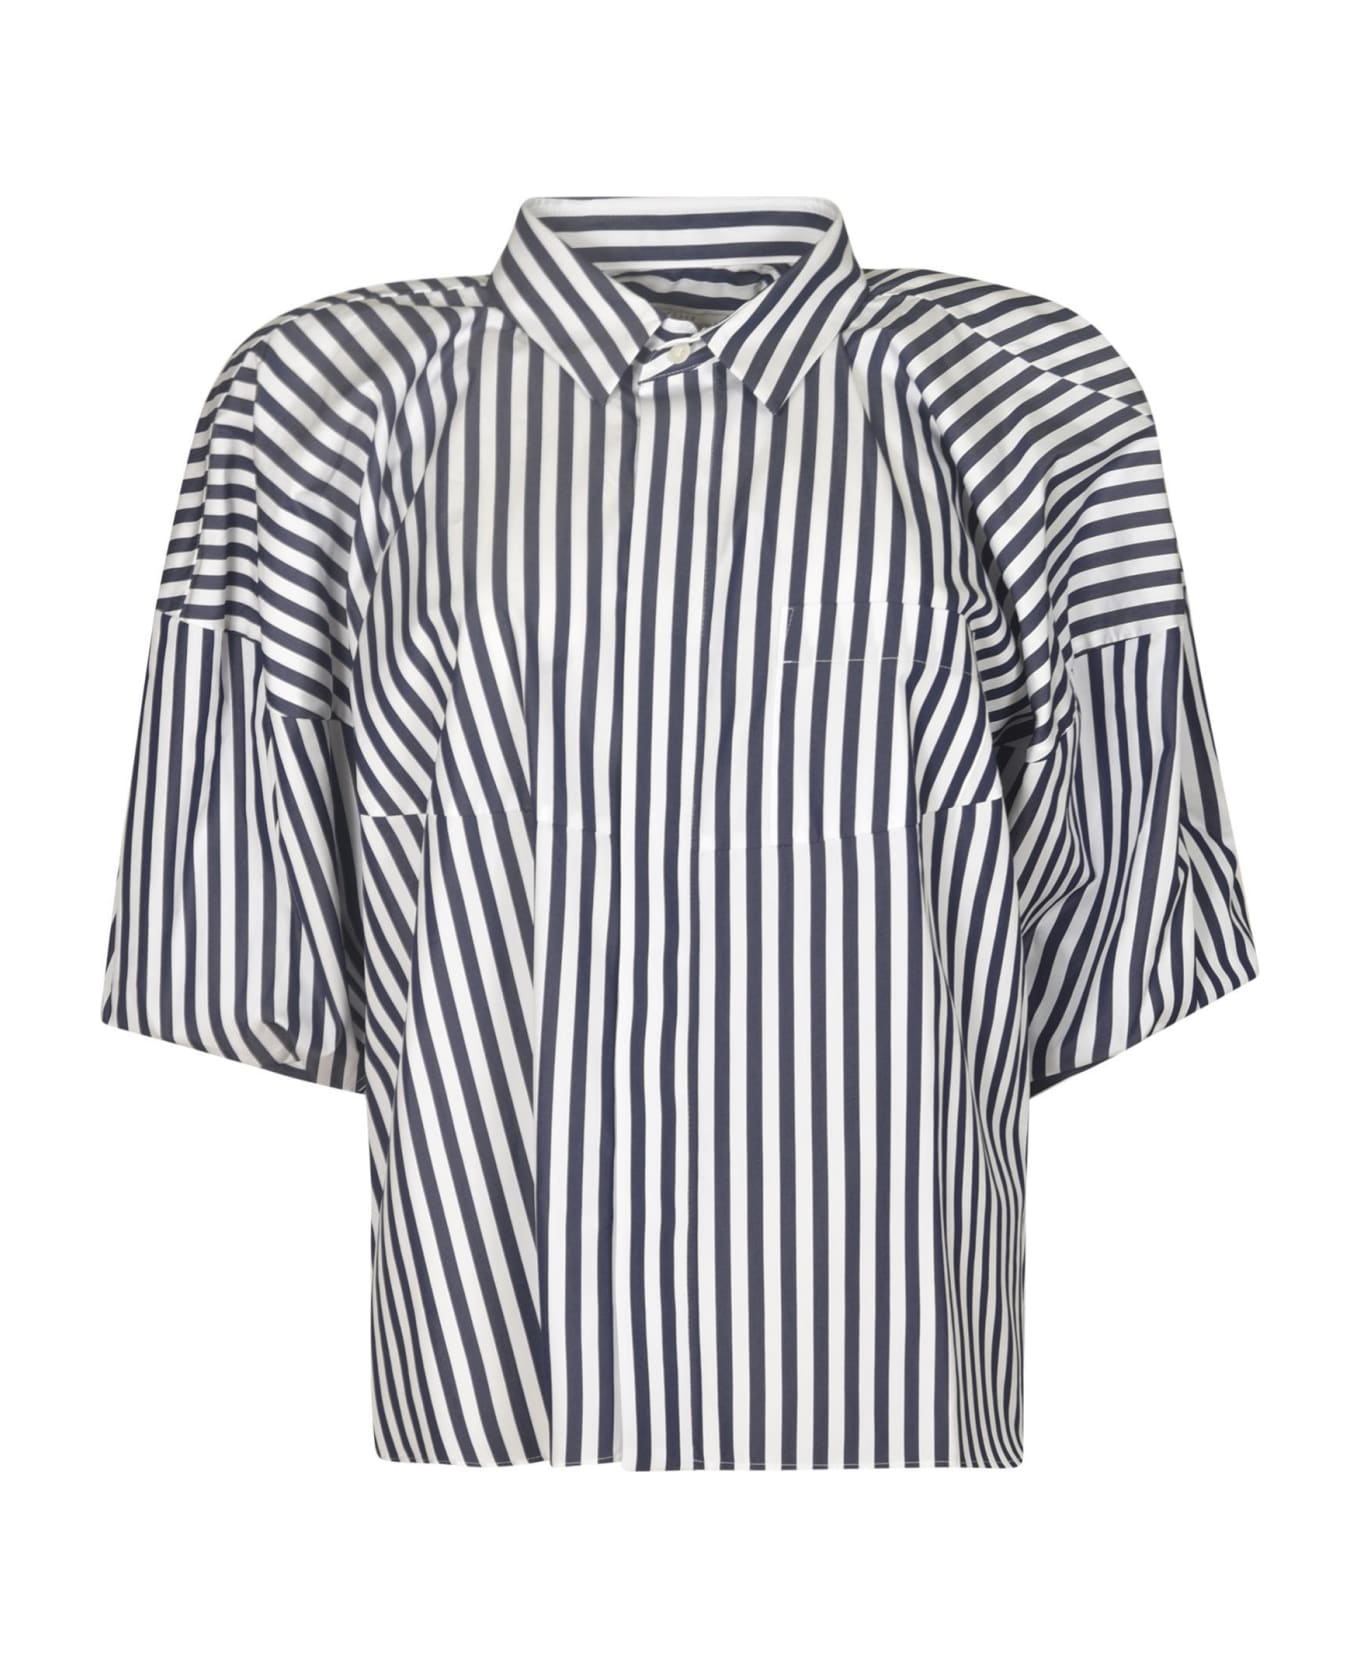 Sacai Striped Shirt - Navy シャツ